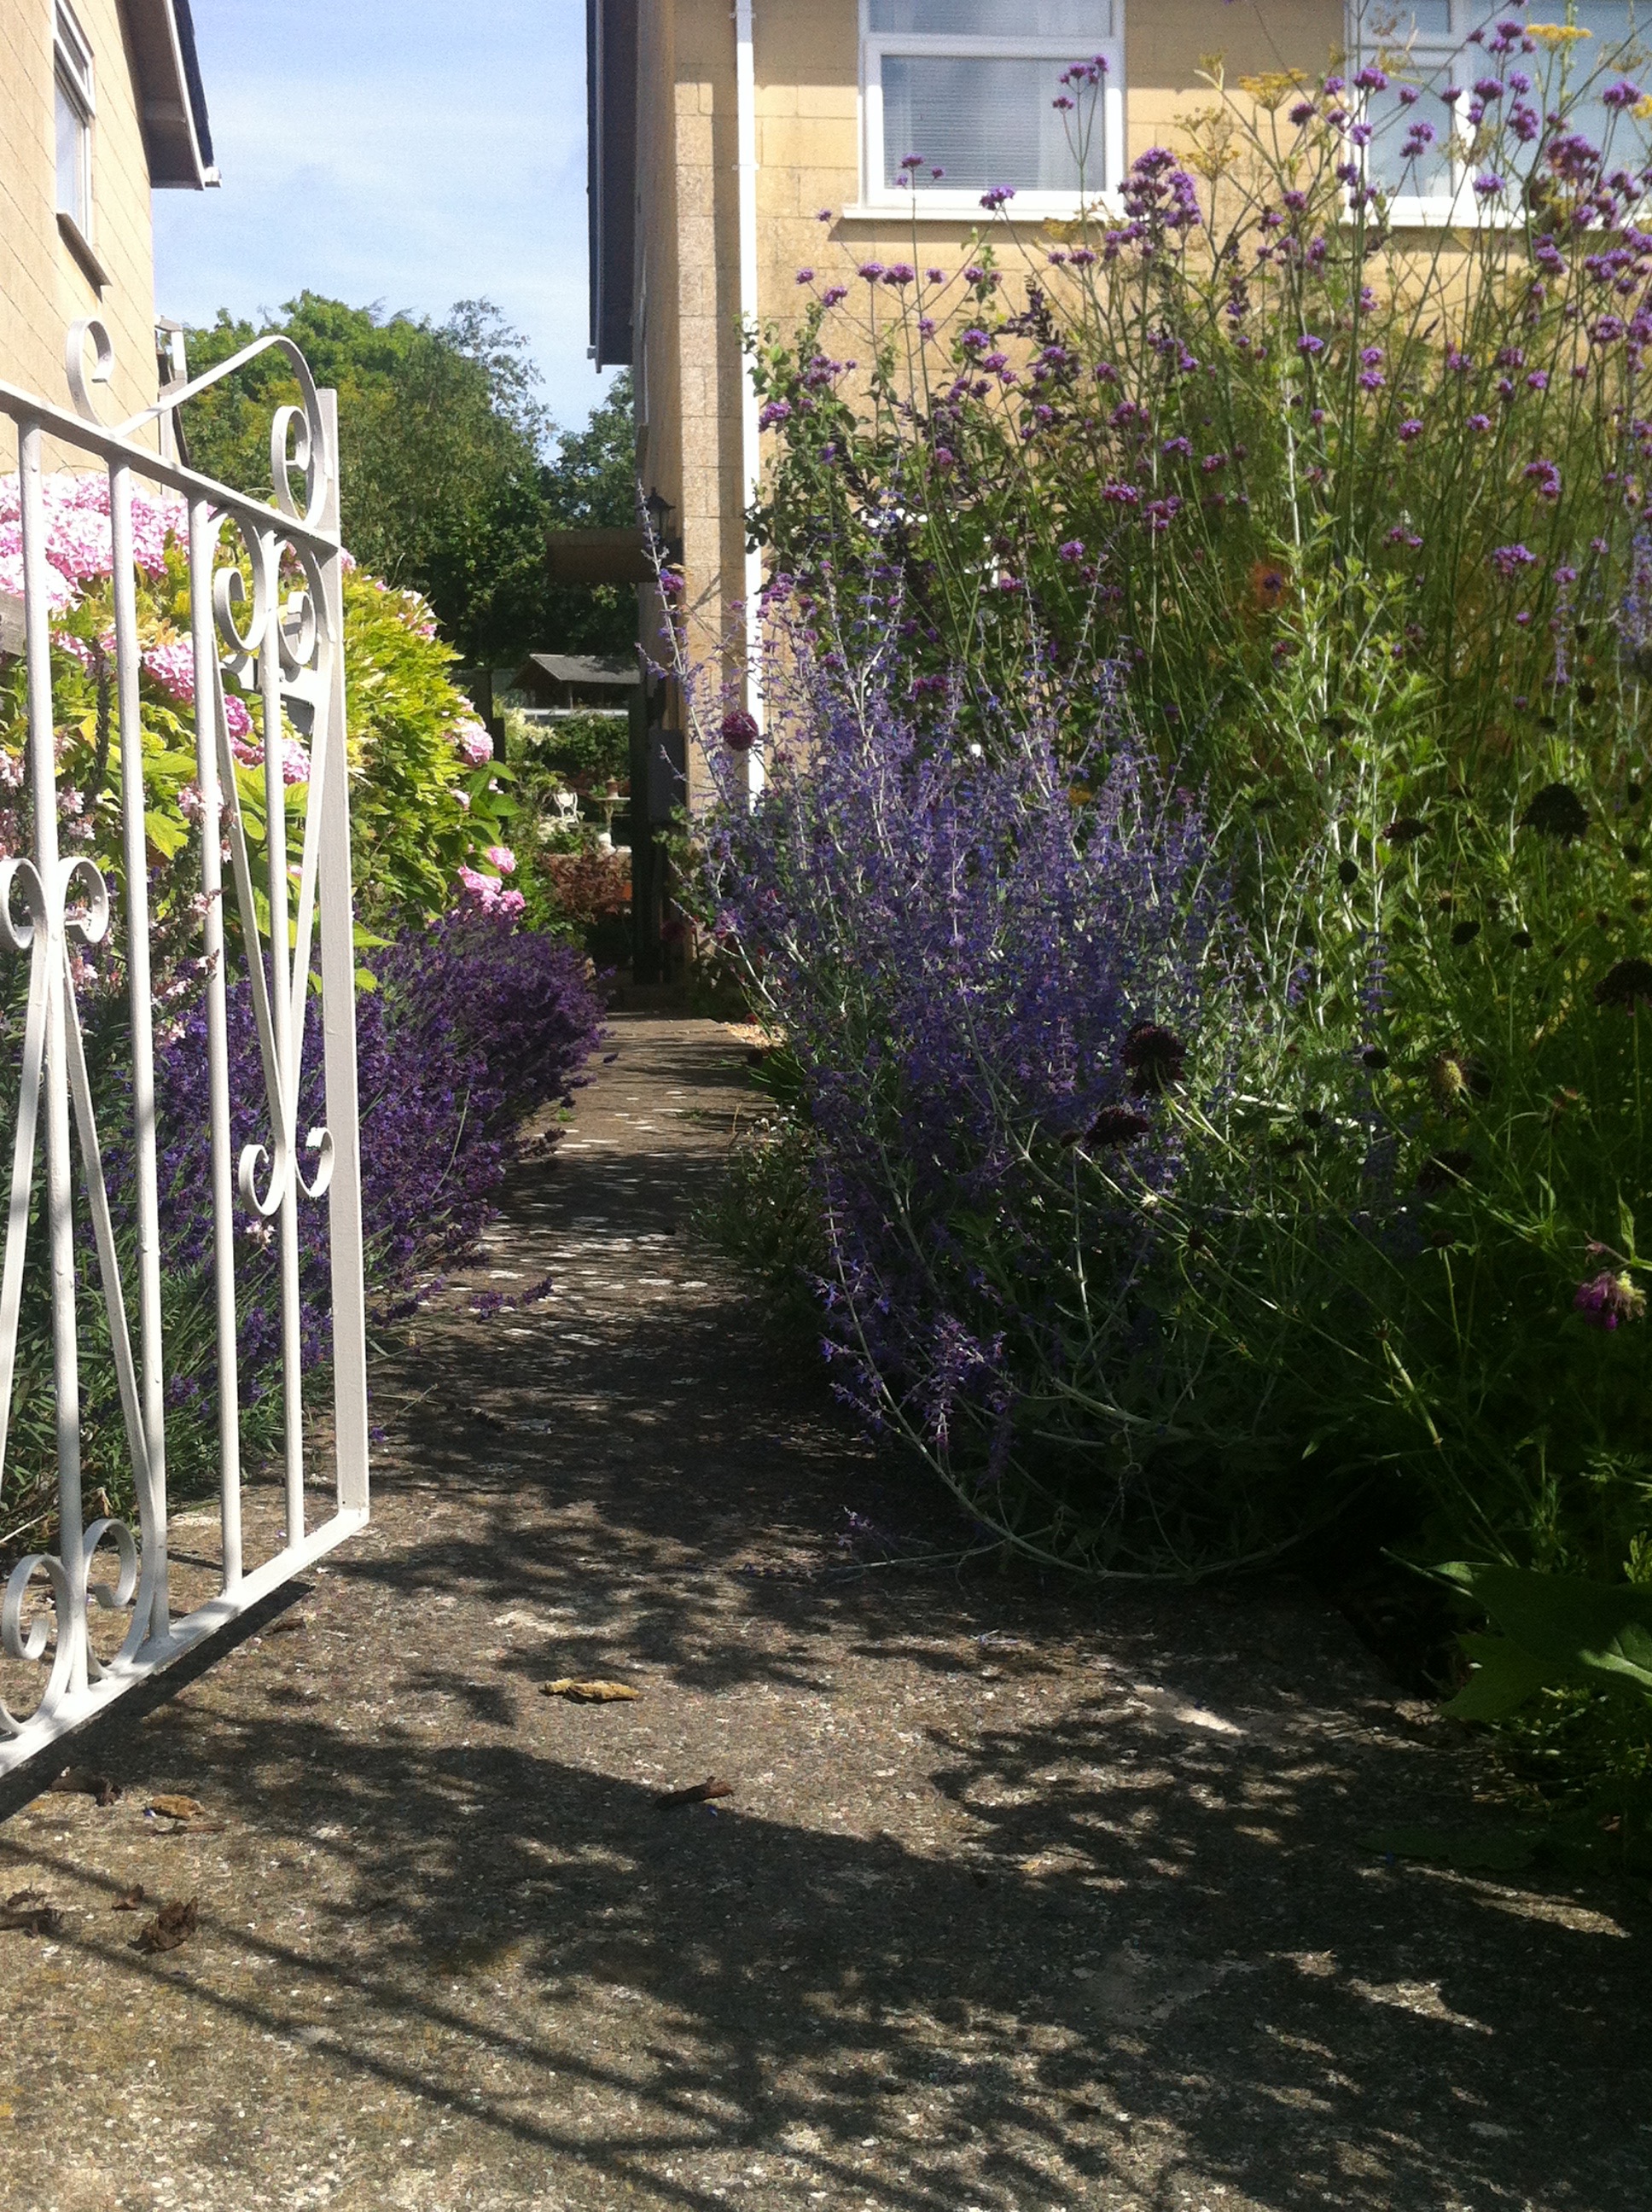 Arch gateway into the garden